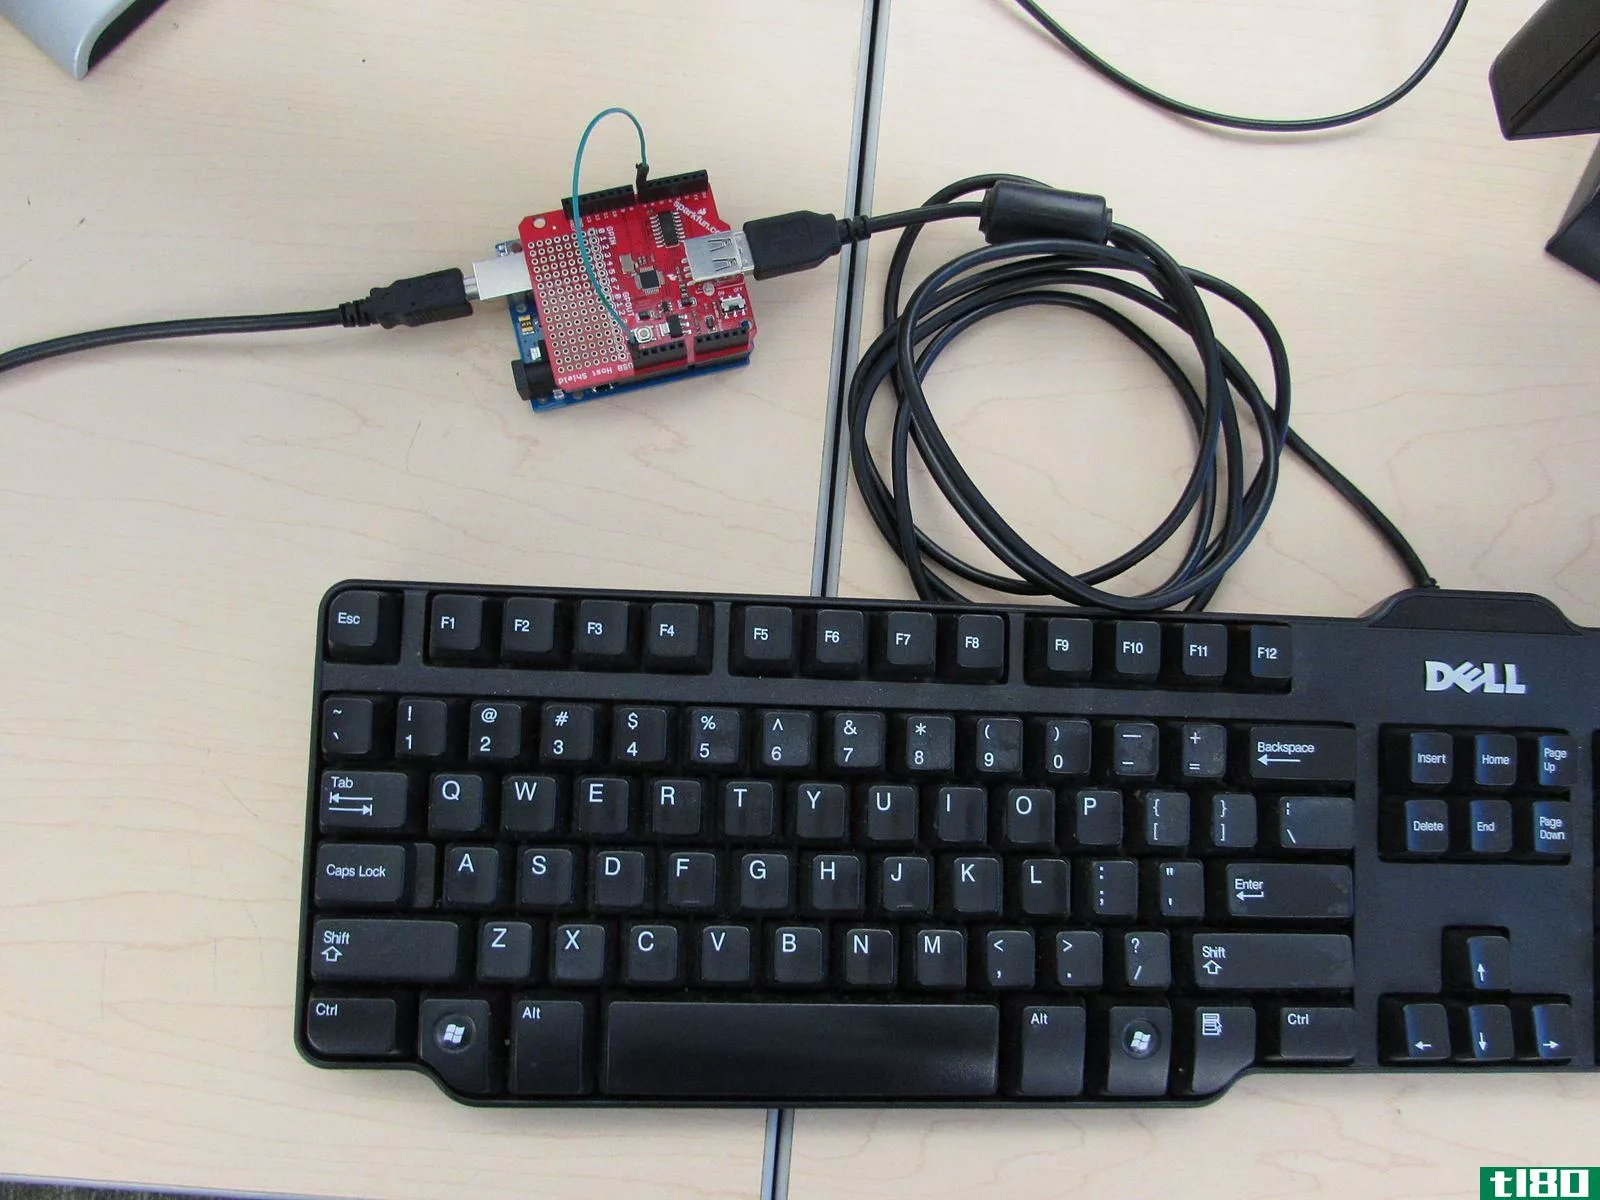 usb键盘(usb keyboard)和蓝牙键盘(bluetooth keyboard)的区别